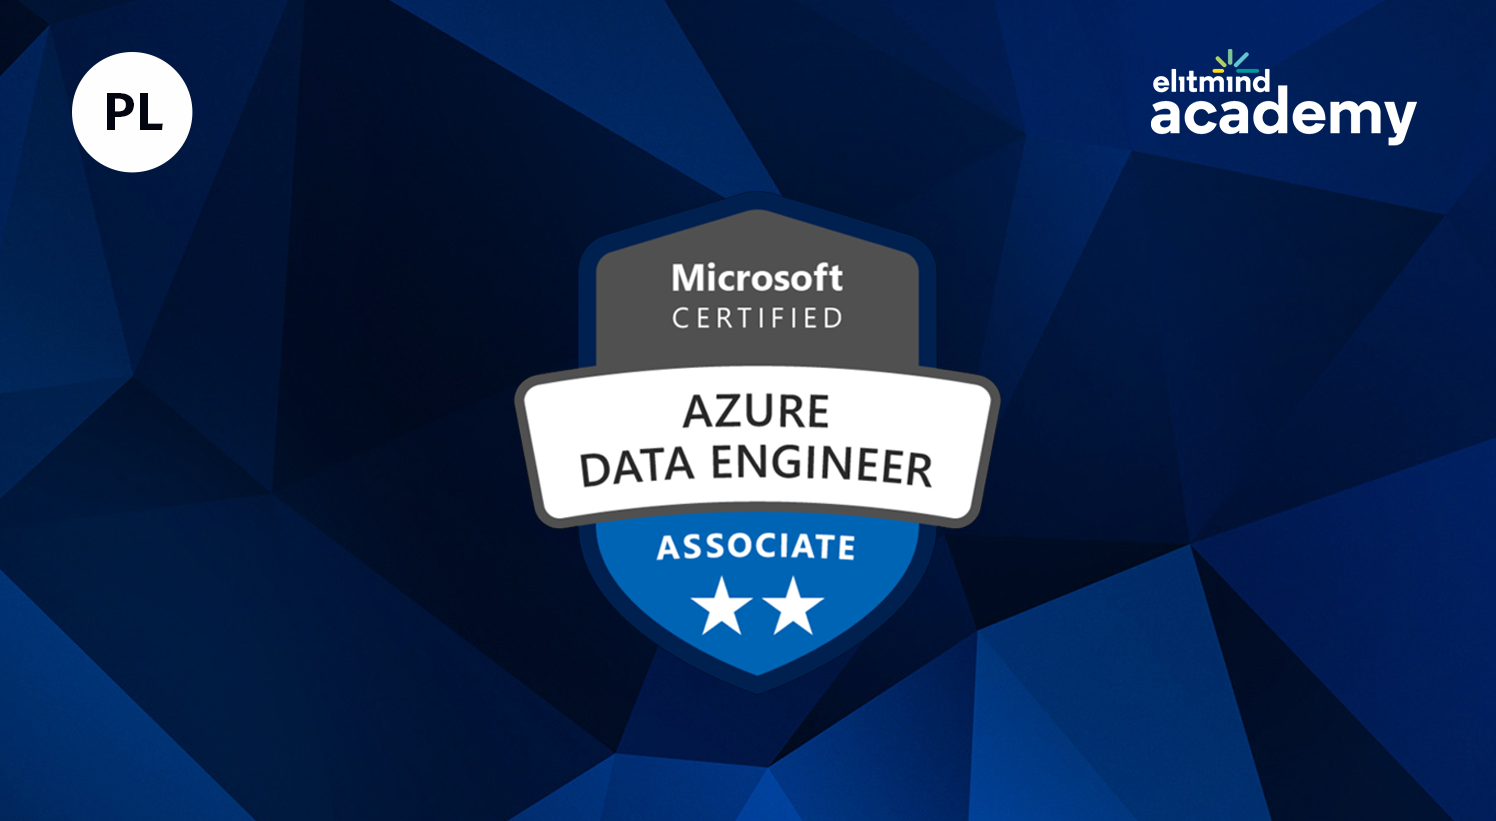 [PL] Data Engineering on Microsoft Azure DP-203 + voucher